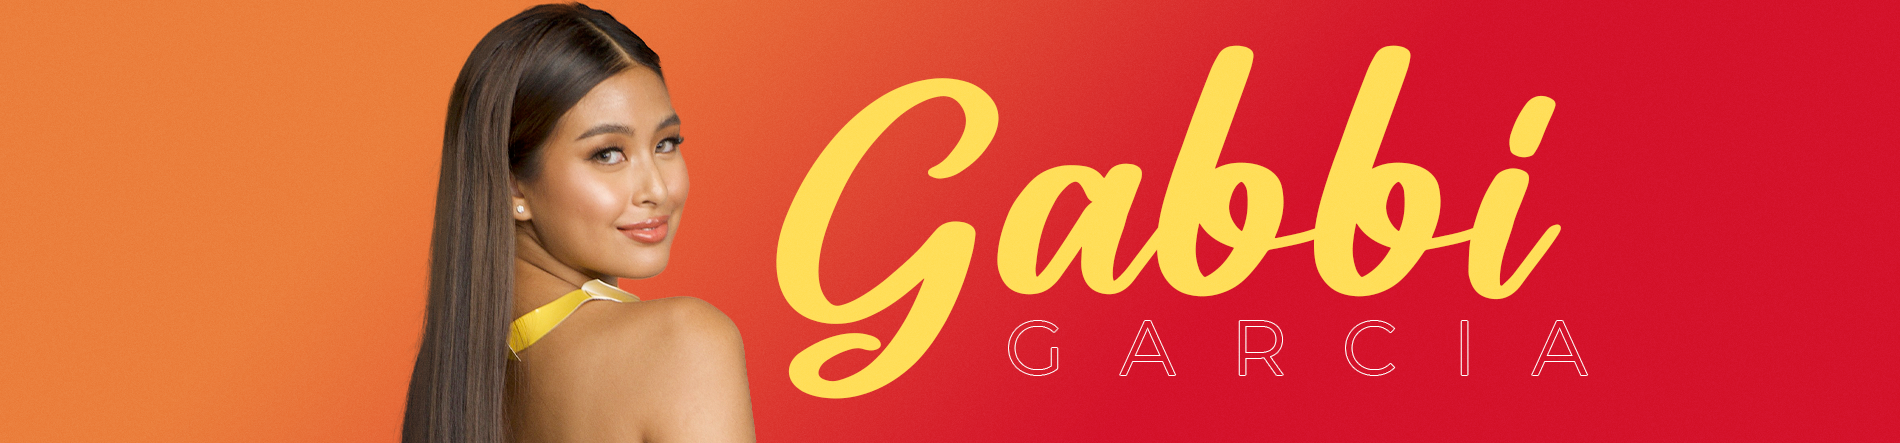 Gabbi Garcia Desktop Banner